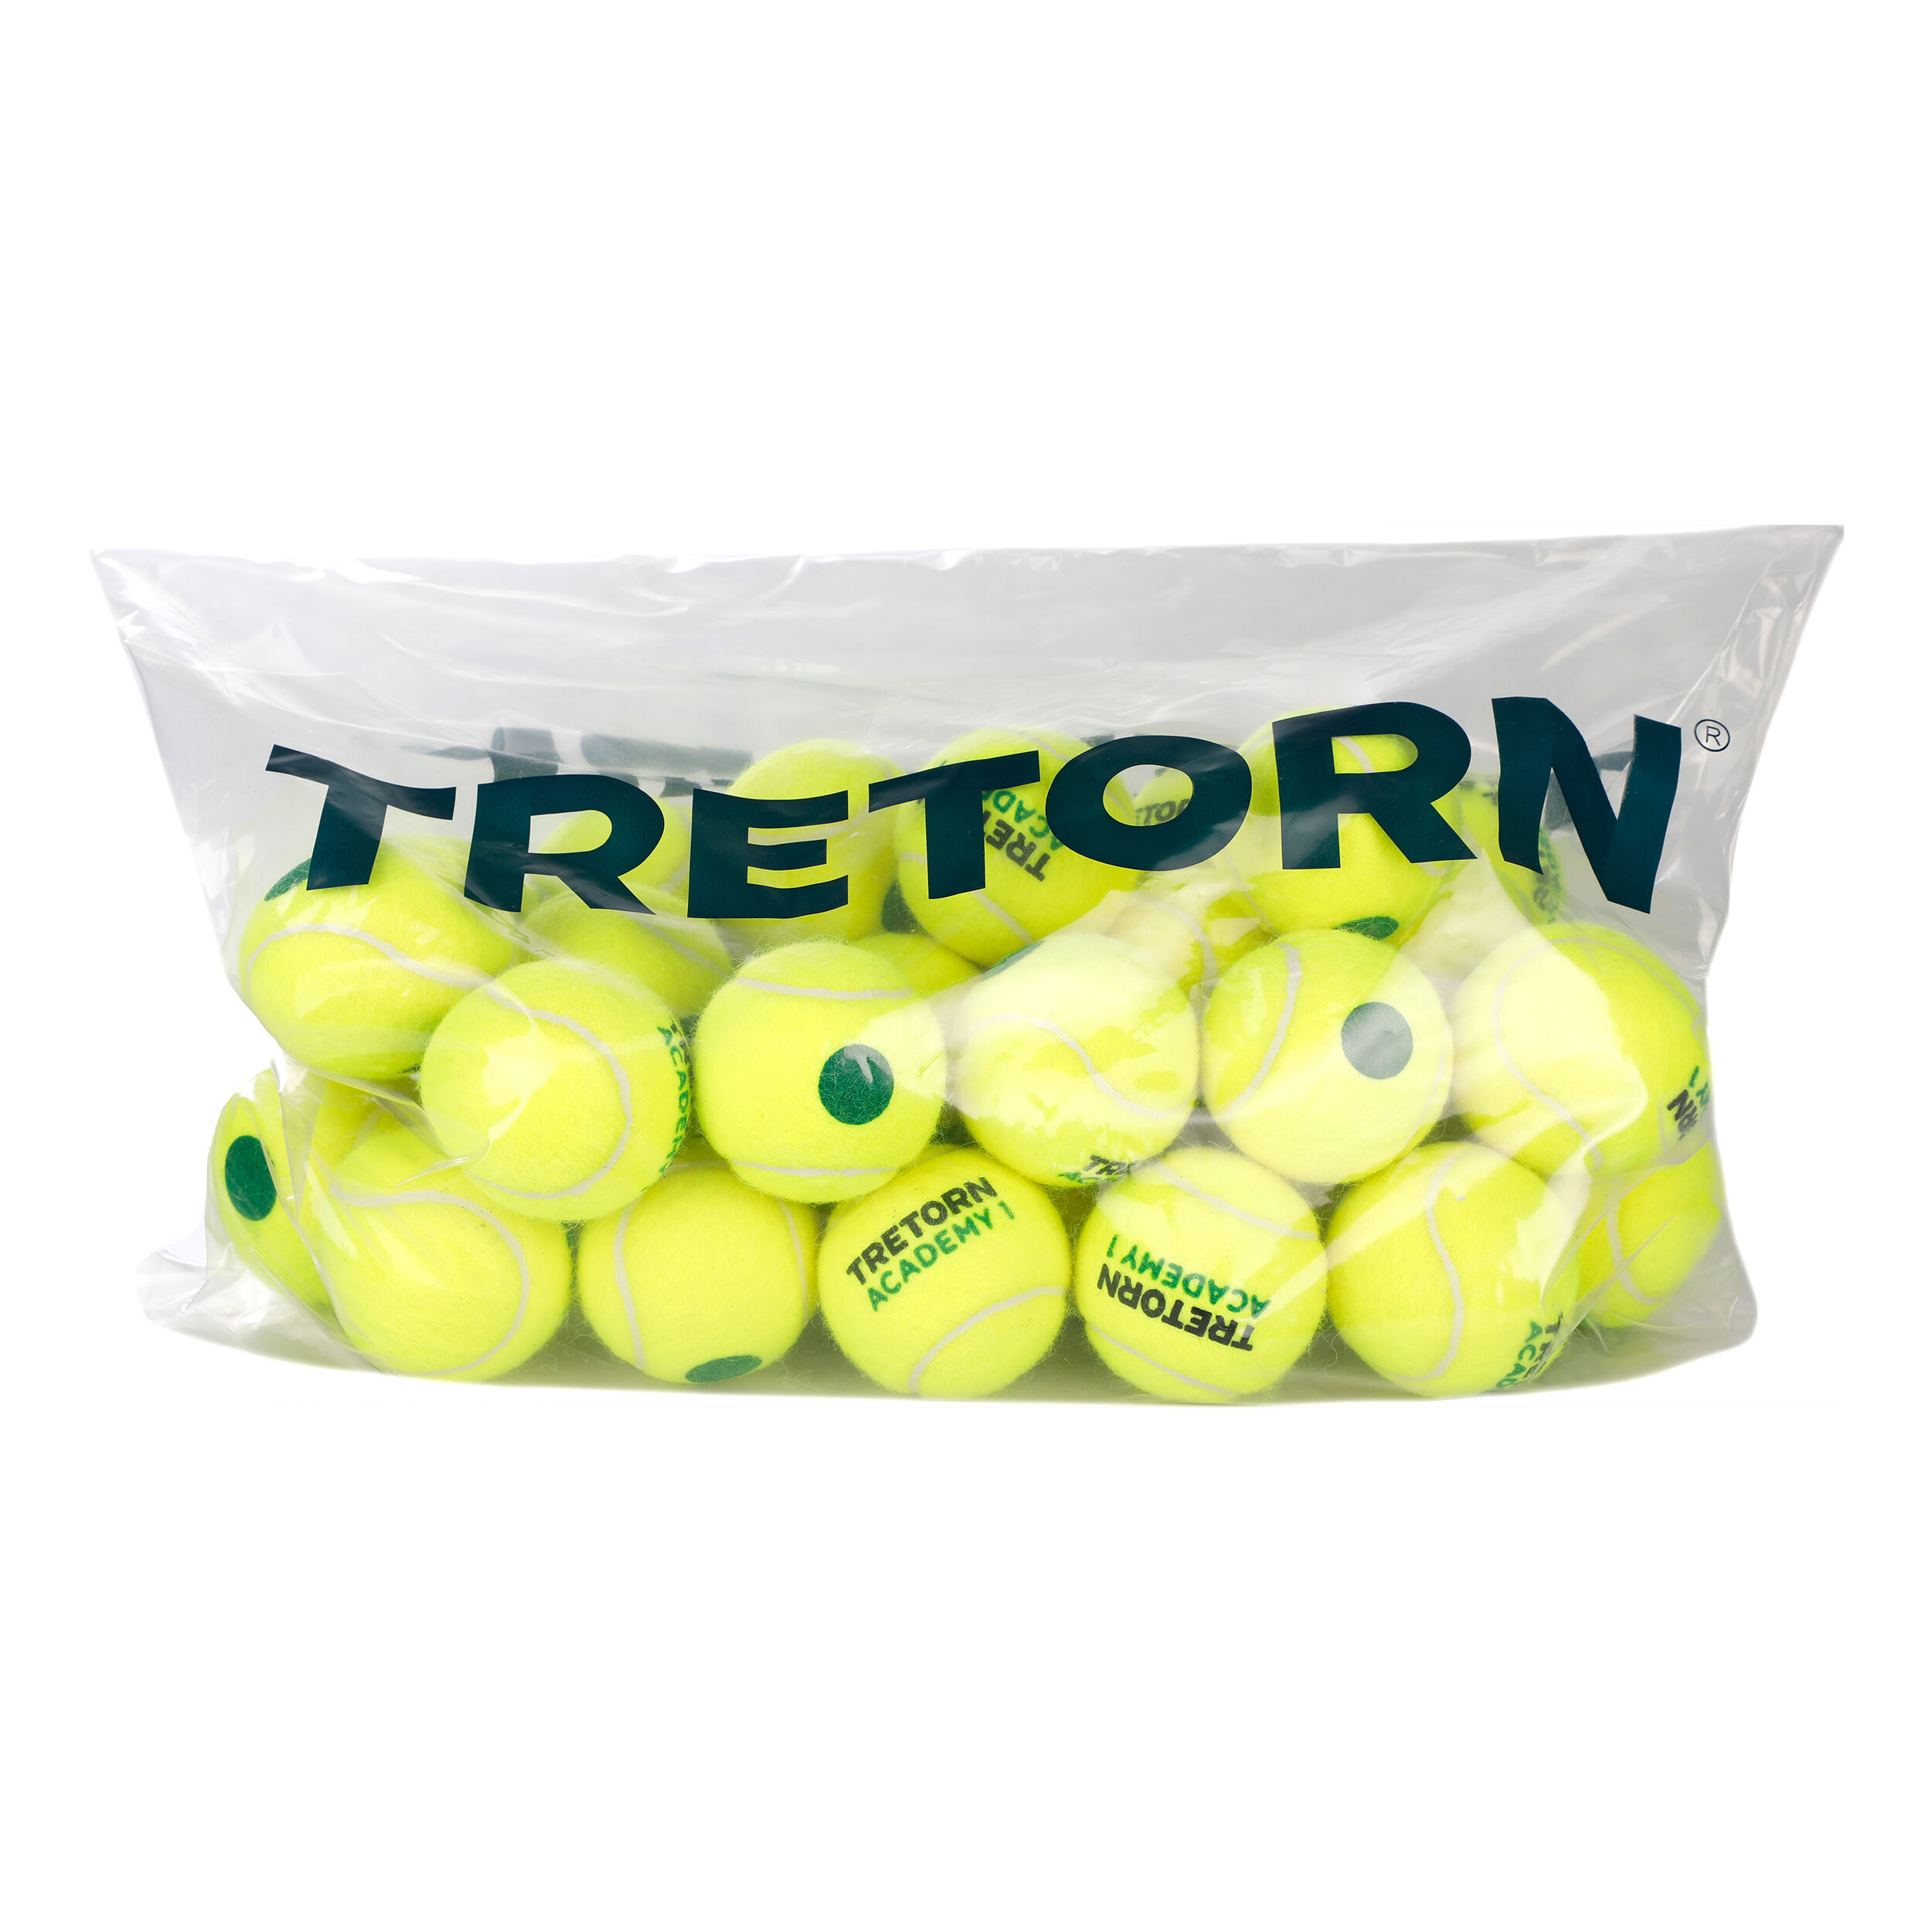 NEW OLD STOCK 9 Wilson Platform Tennis Balls 3 Sealed Packs FREE SHIPPING 